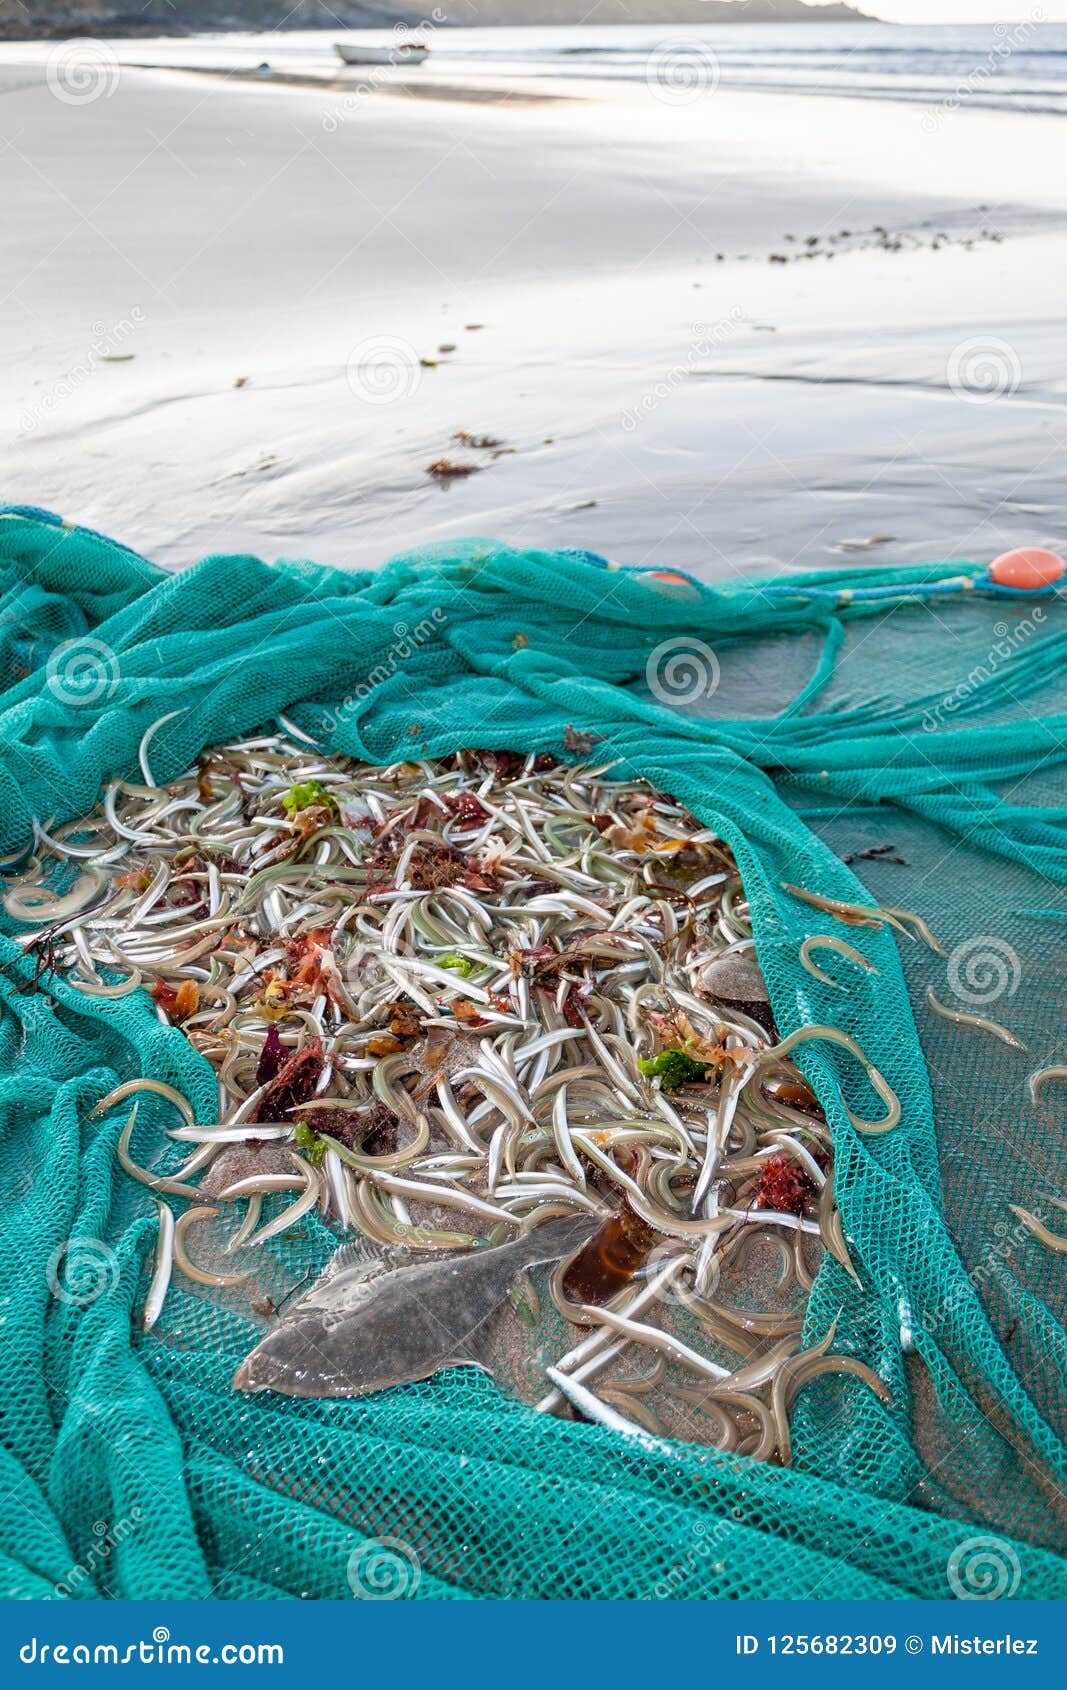 Fishing Net Full of Fish on Beach Stock Image - Image of live